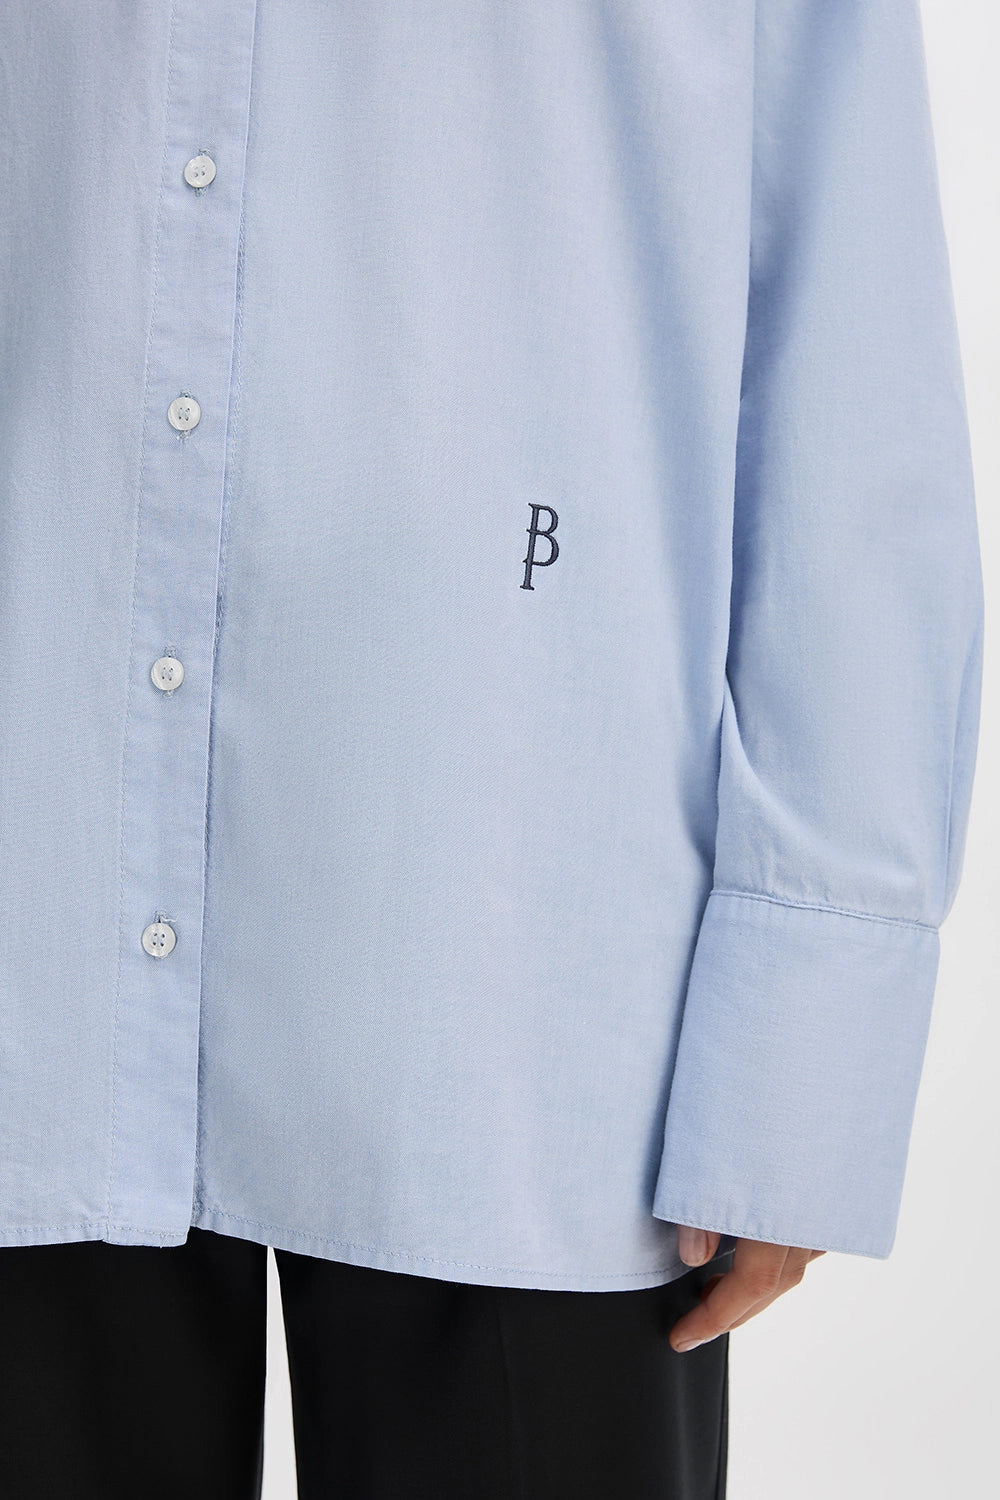 BP Monogrammed Classic Shirt